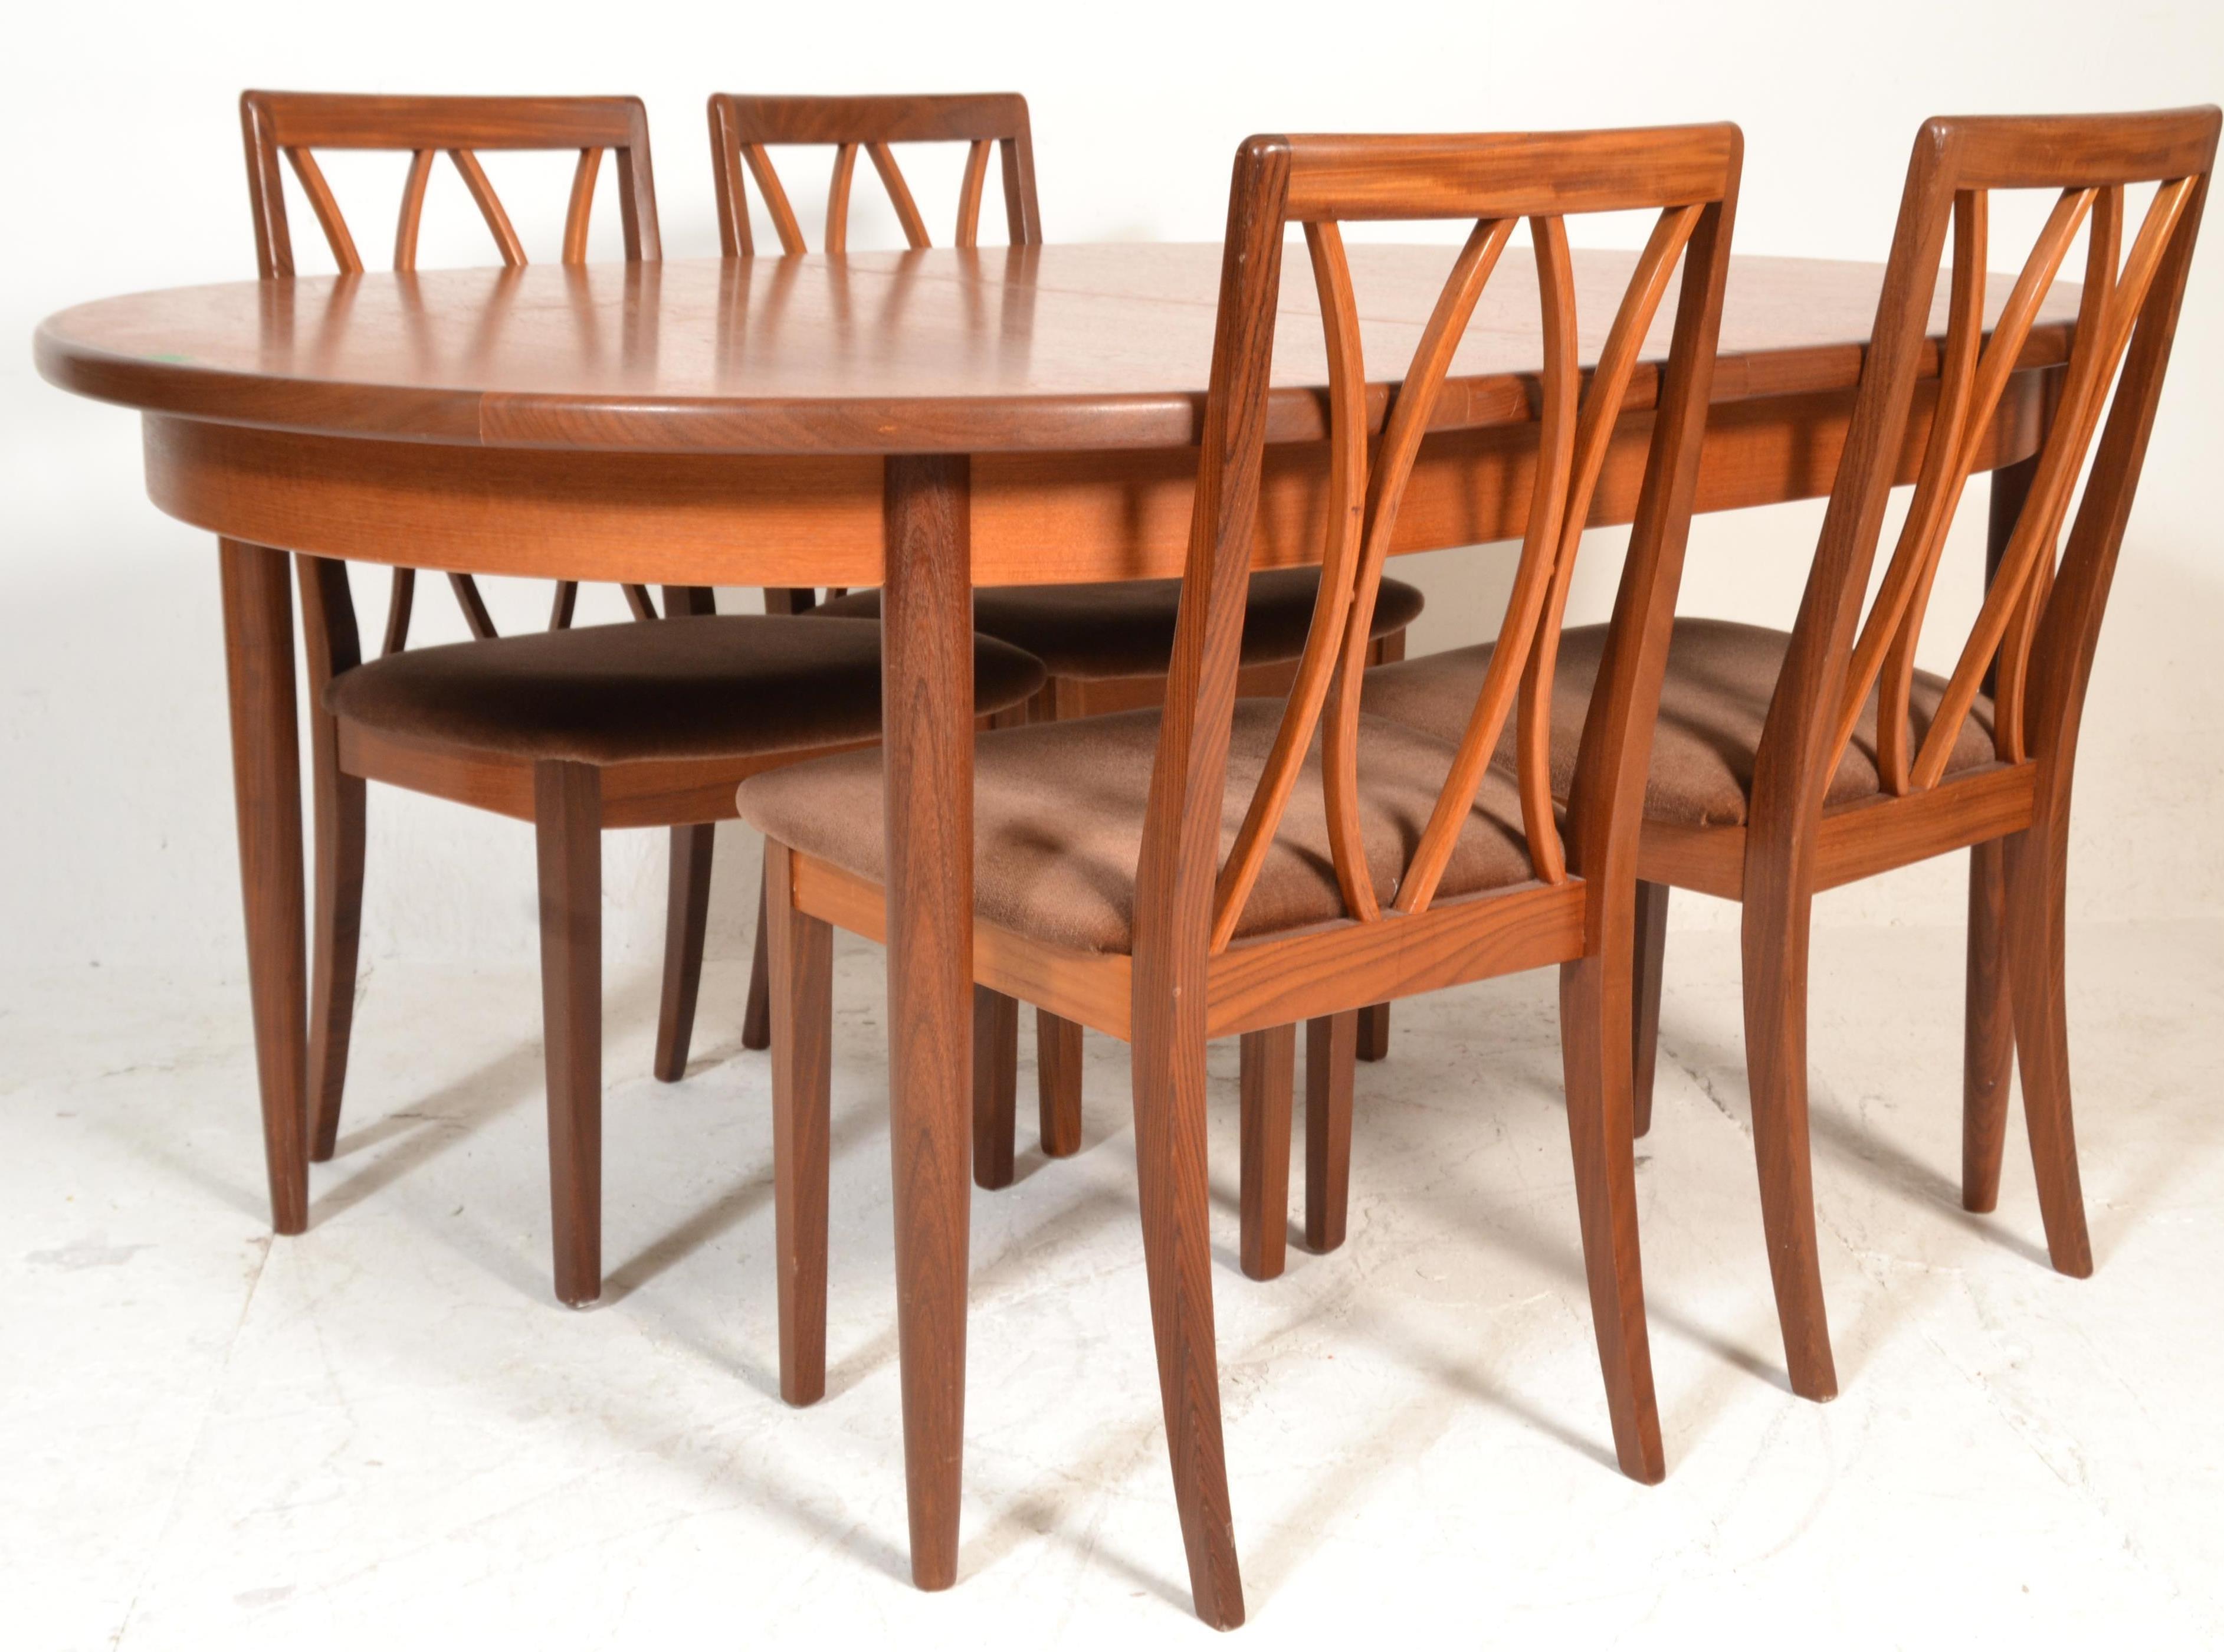 A 1960's mid 20th Century G Plan Fresco range teak wood extendable dining table having an oval top